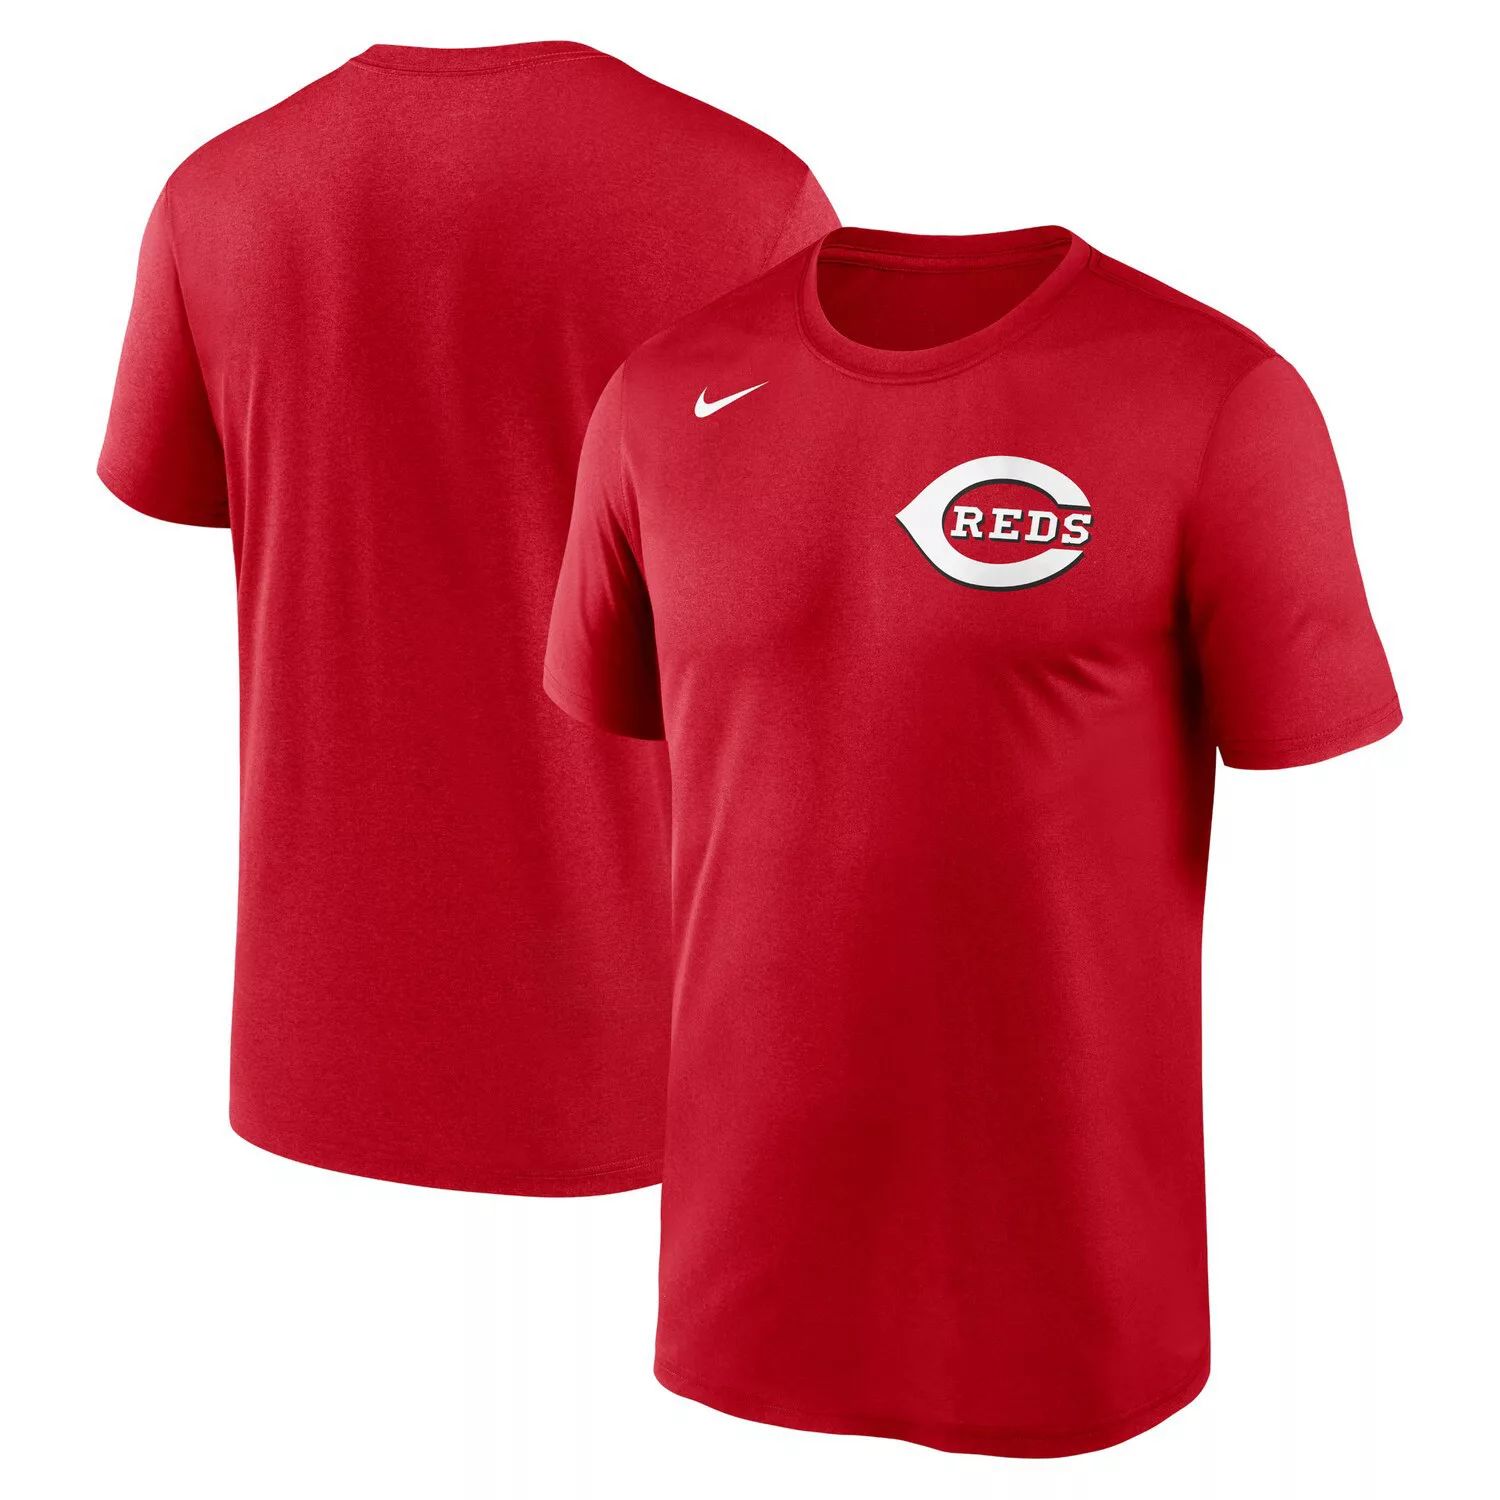 Мужская красная футболка Cincinnati Reds New Legend с надписью Nike